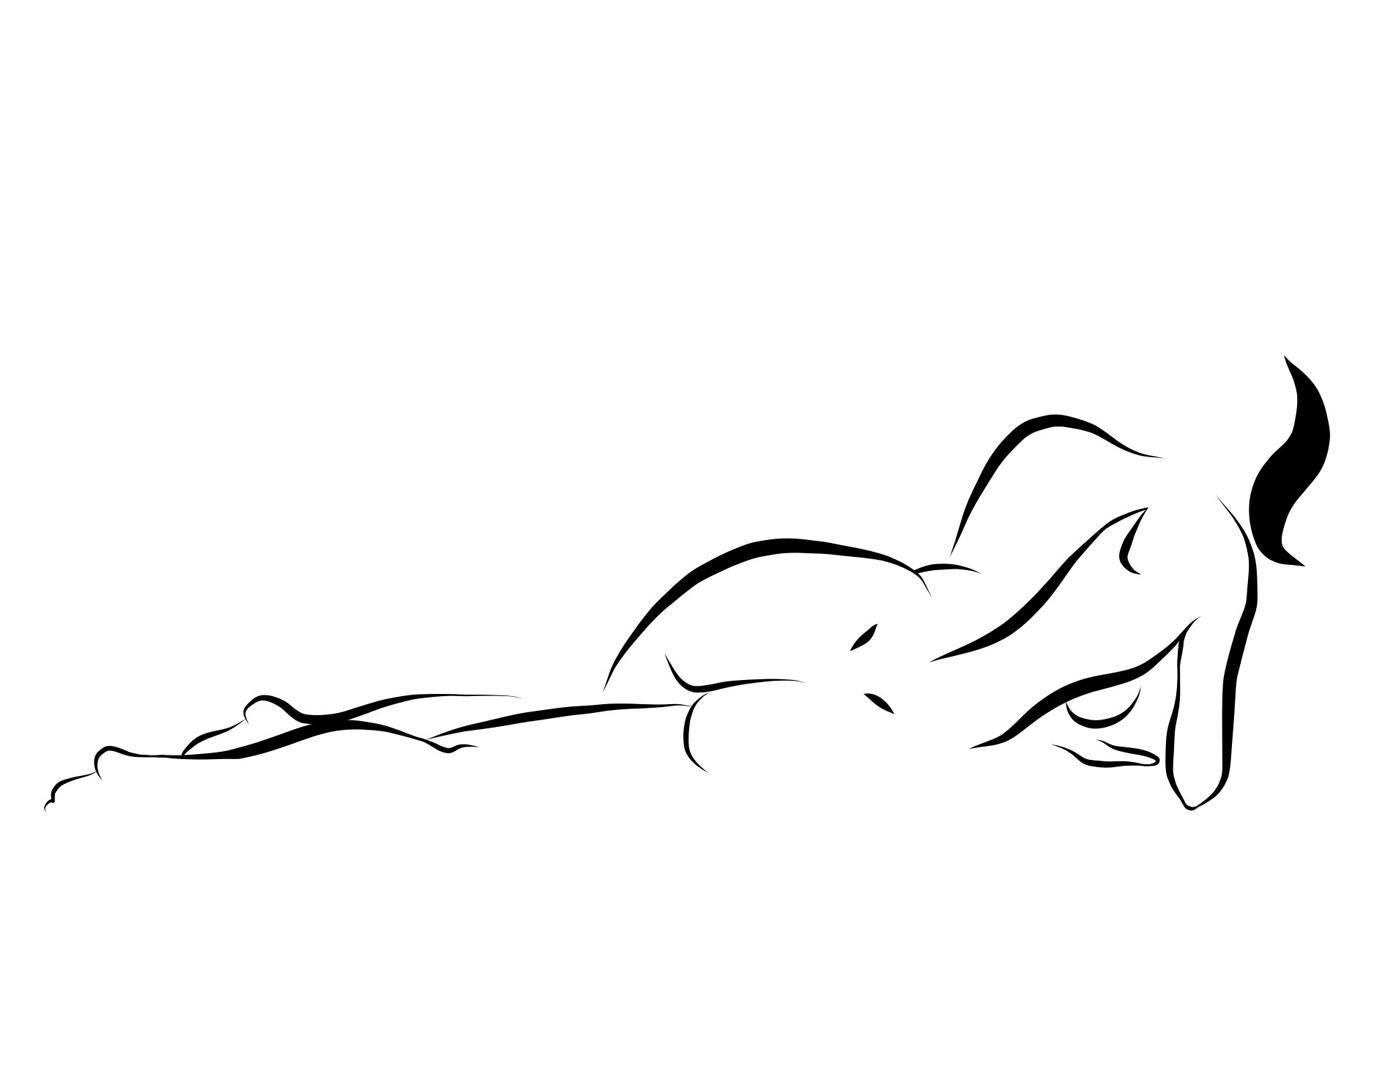 Michael Binkley Nude Print - Haiku #30, 6/50 - Digital Vector Drawing Reclining Female Nude Woman Figure